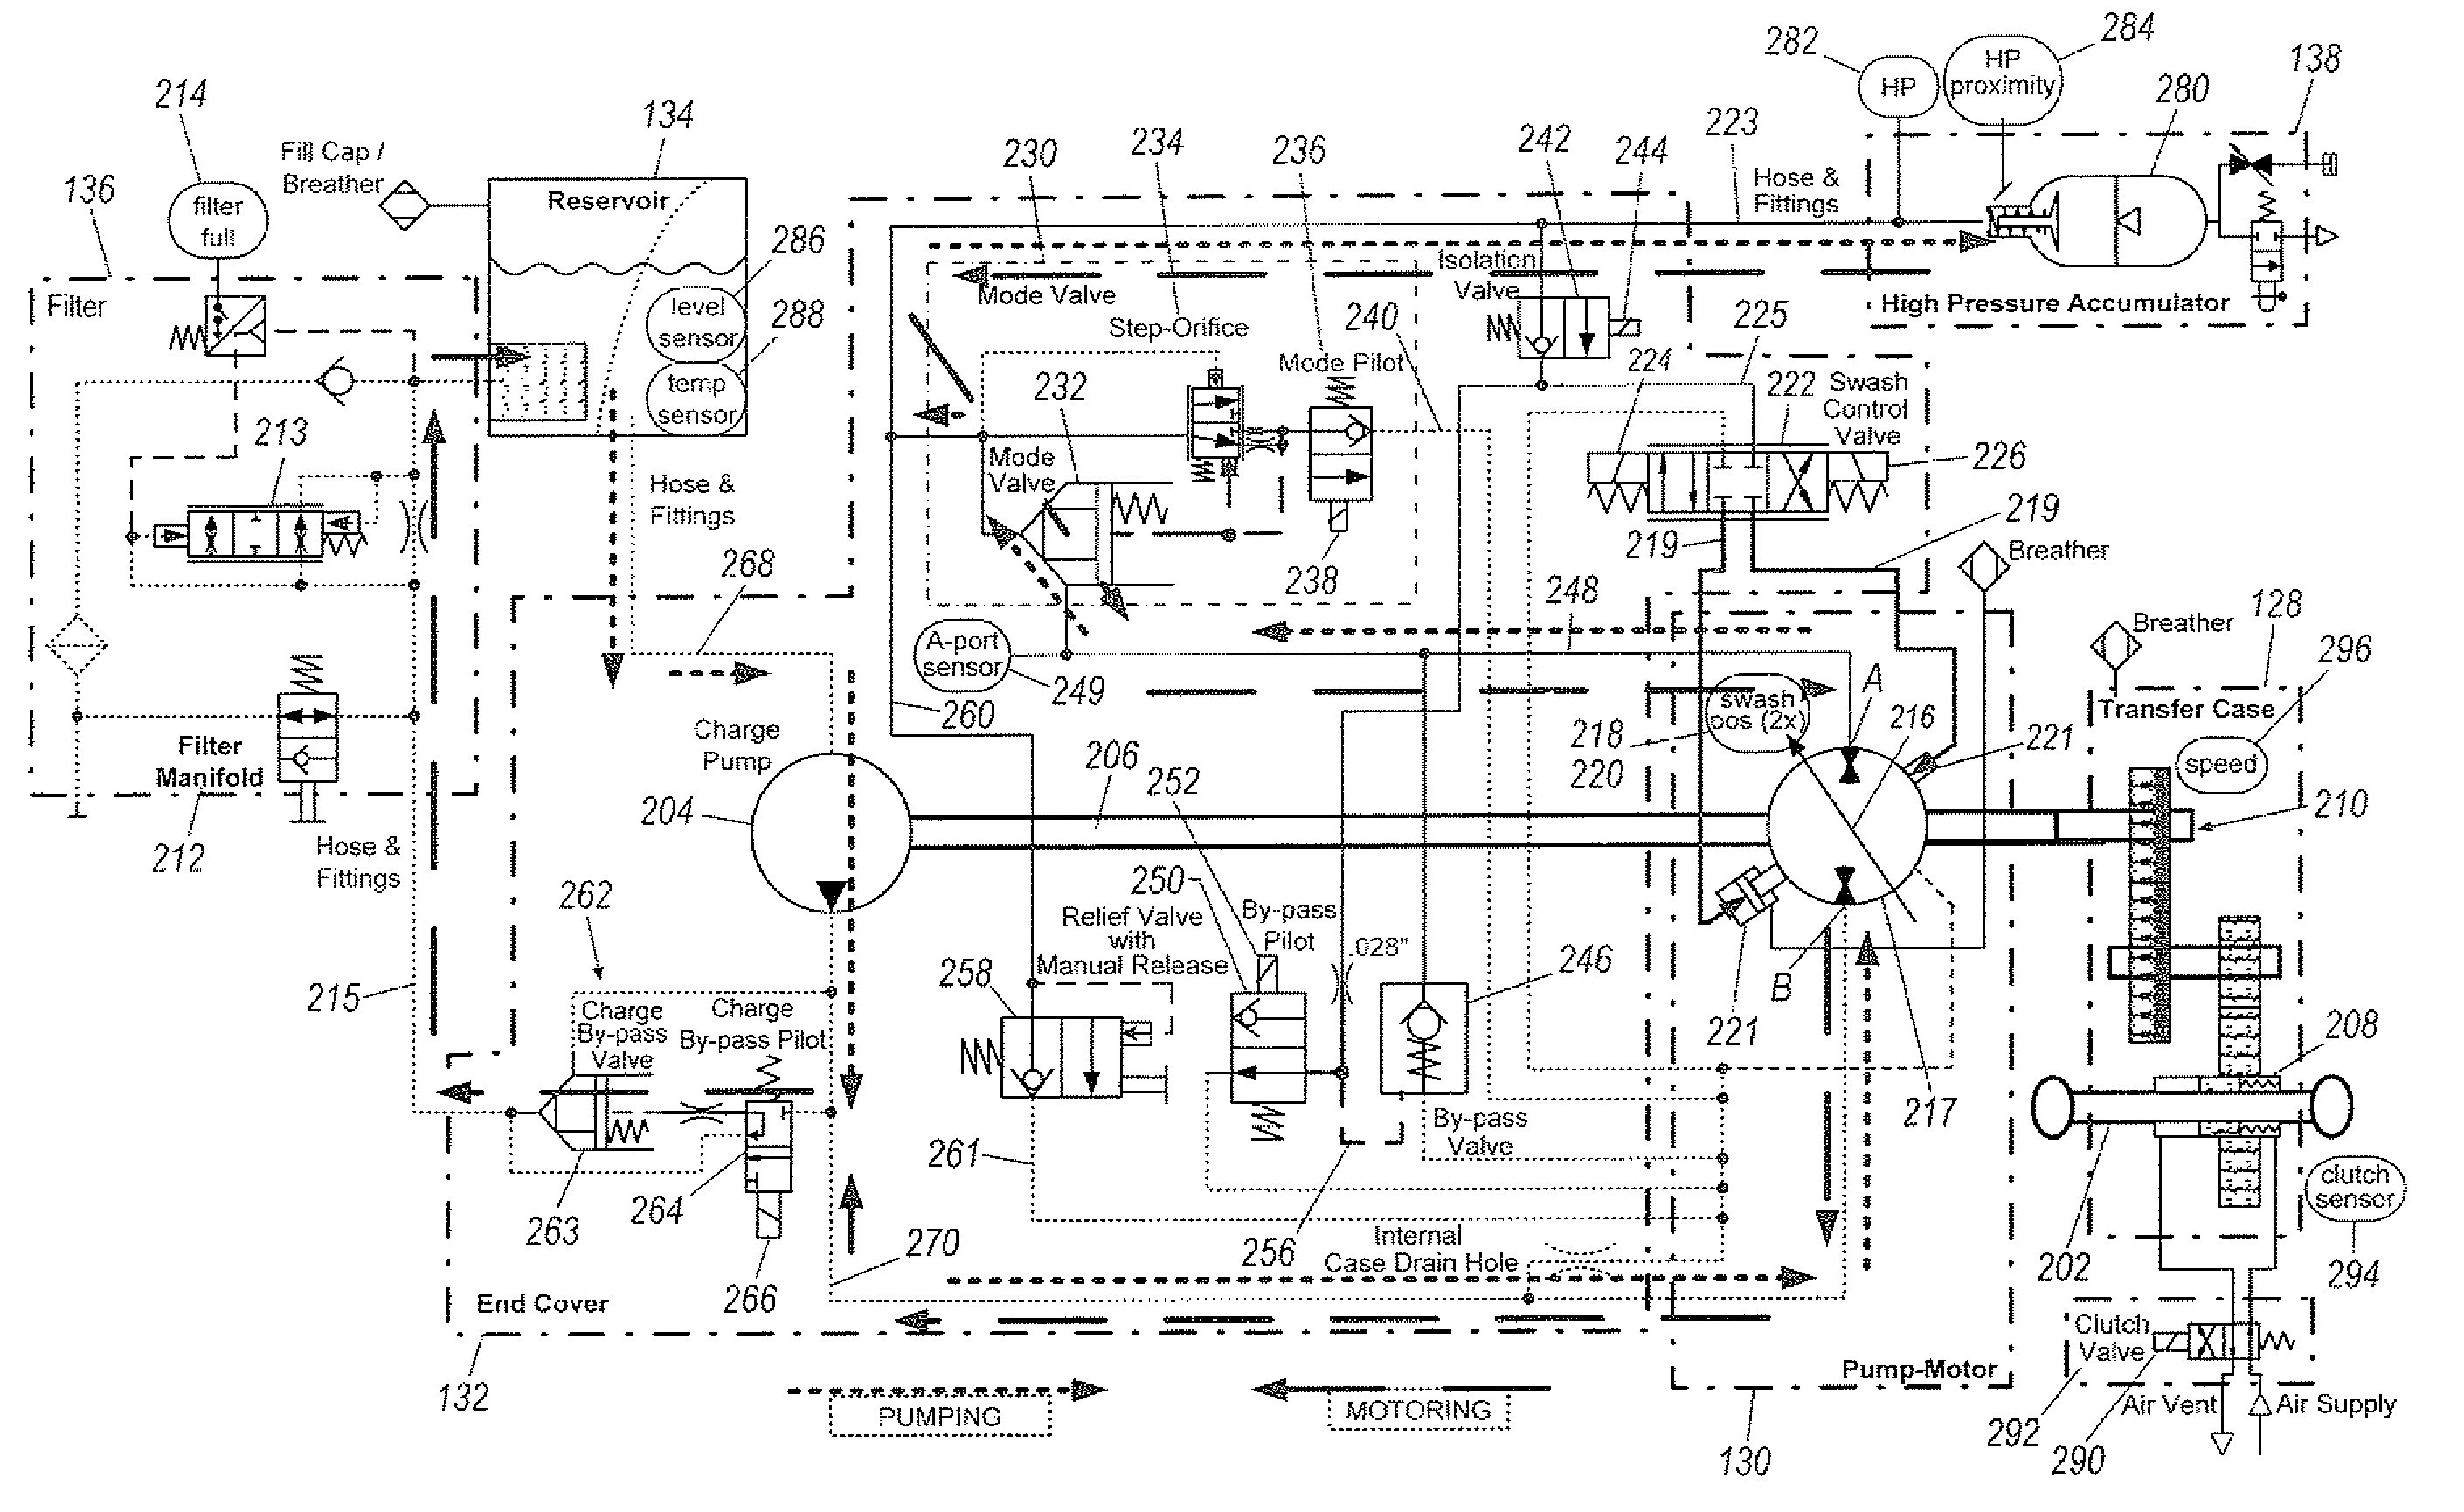 Hydraulic Press Circuit Diagram Pdf Electro Hydraulic Circuit Symbols Circuit and Schematics